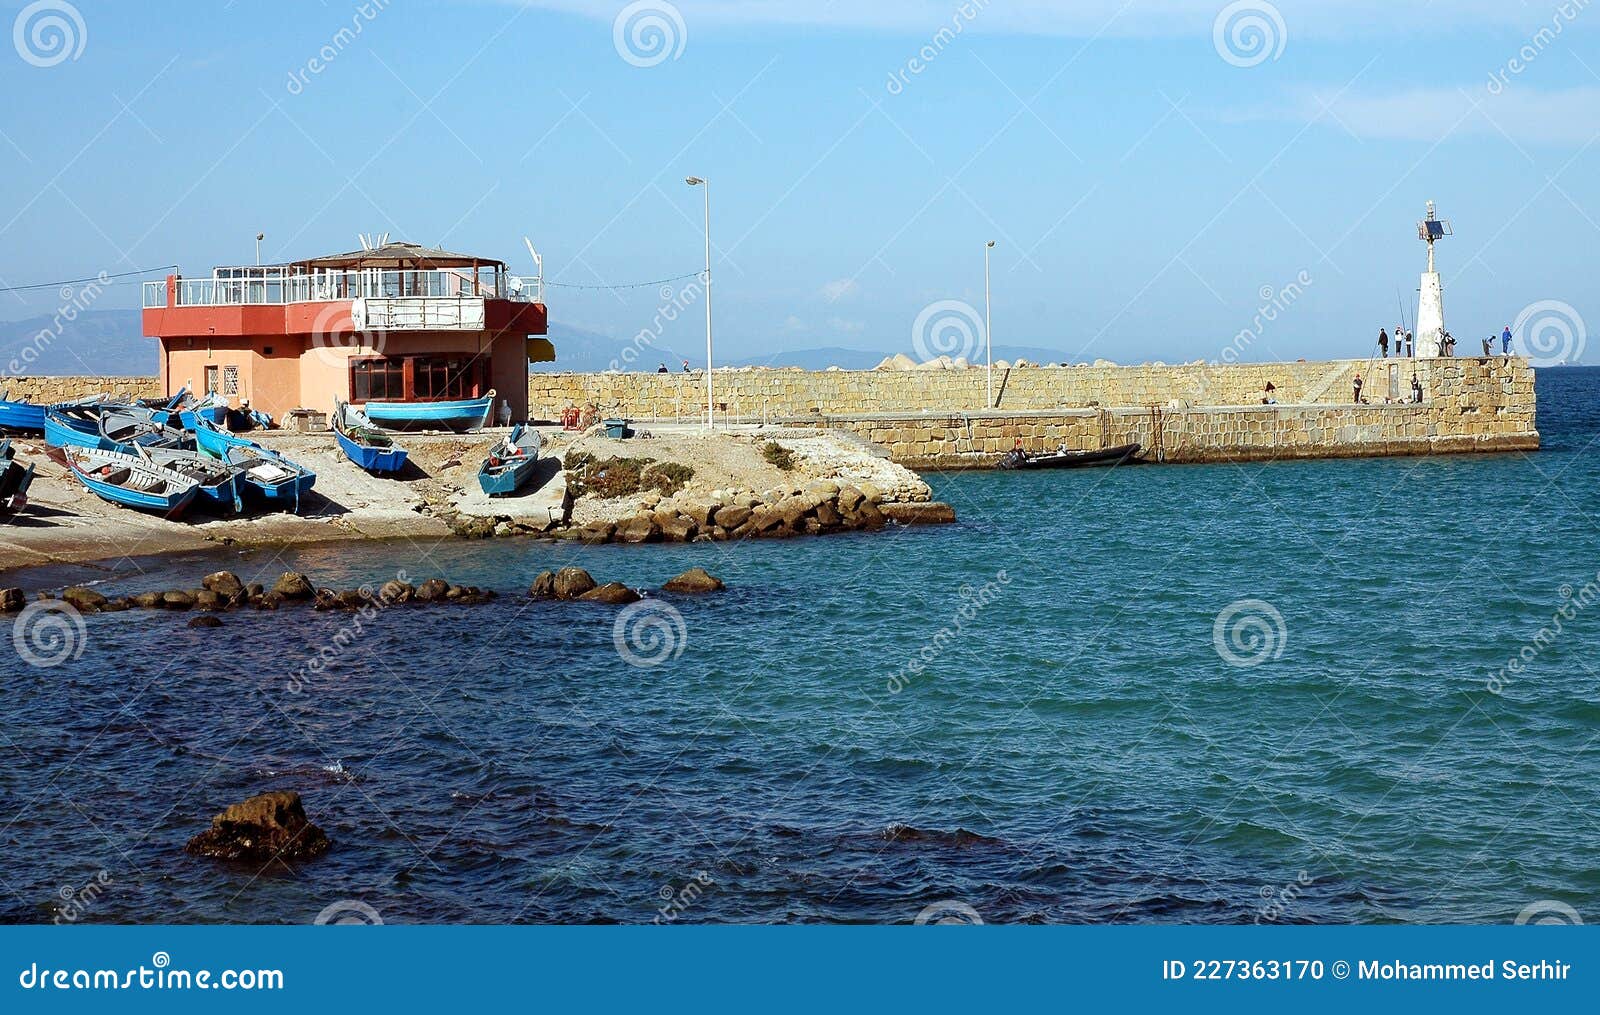 Port of Ksar Sghir in Northern Morocco Stock Photo - Image of melilla,  mediterranean: 227363170